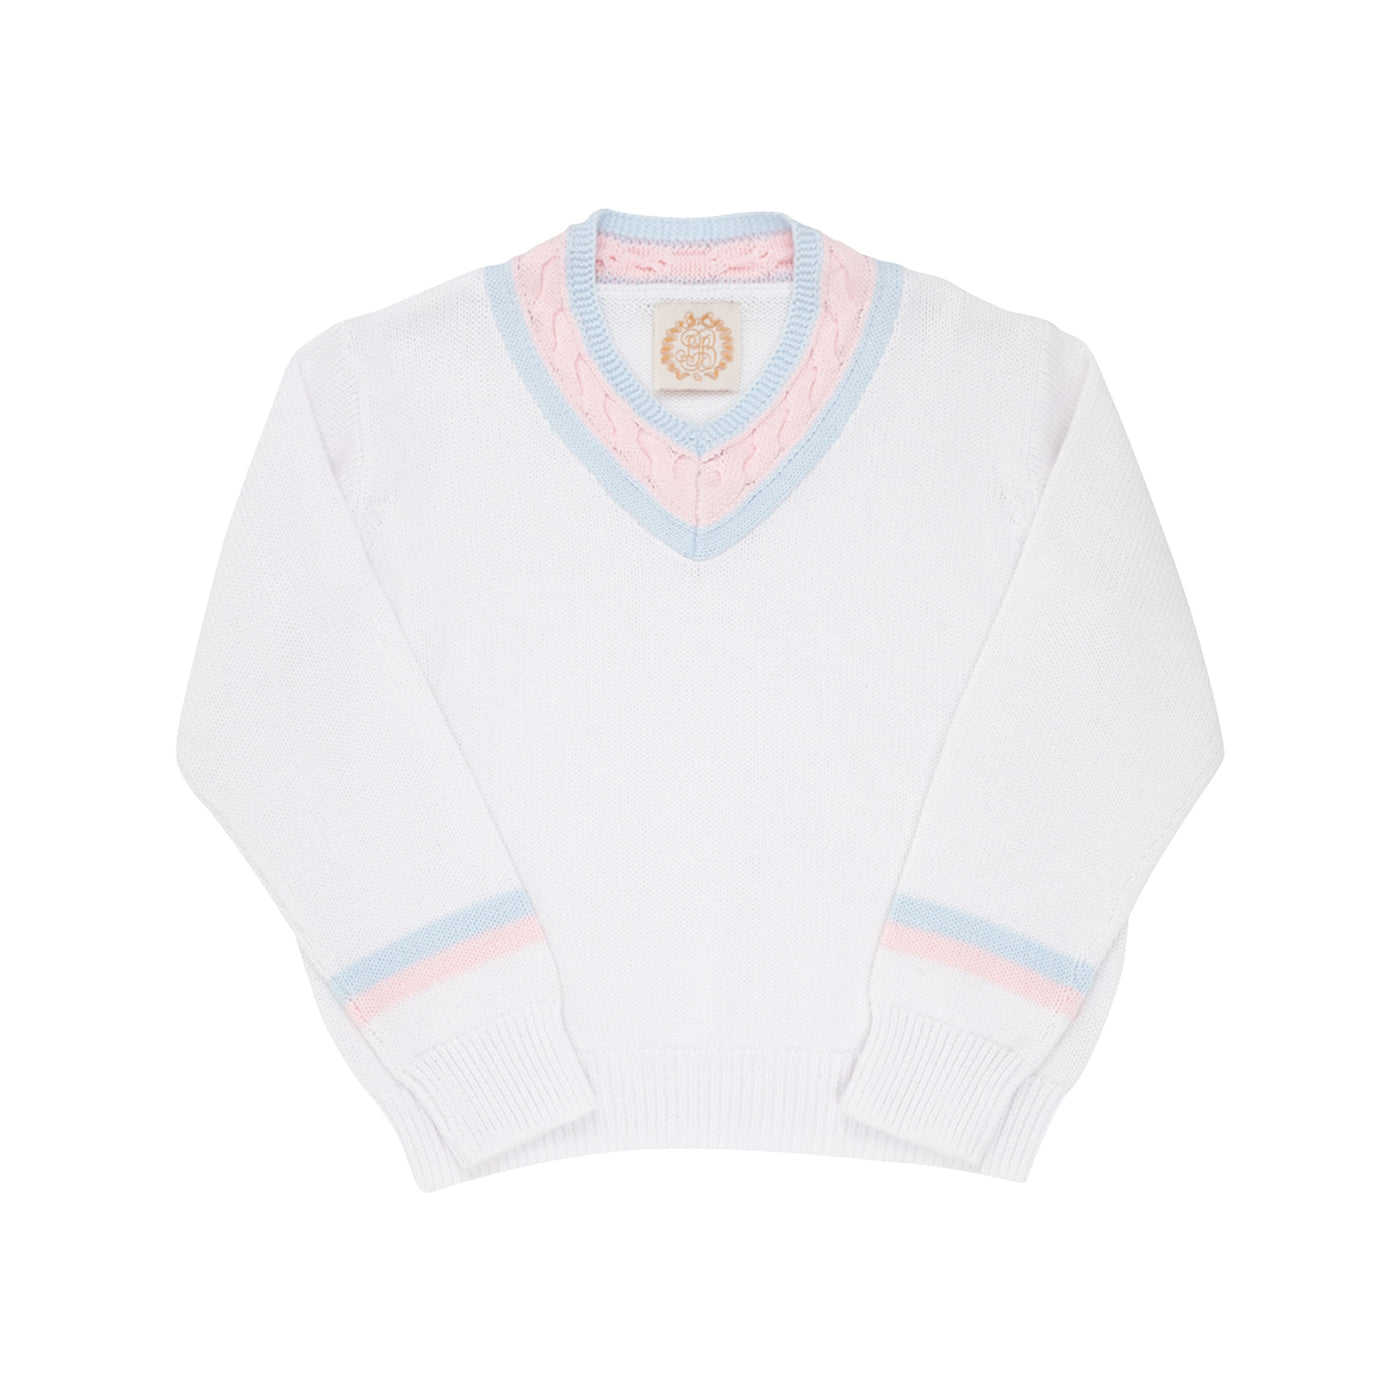 Worth Avenue White With Buckhead Blue & Palm Beach Pink Vivie June V-Neck Sweater